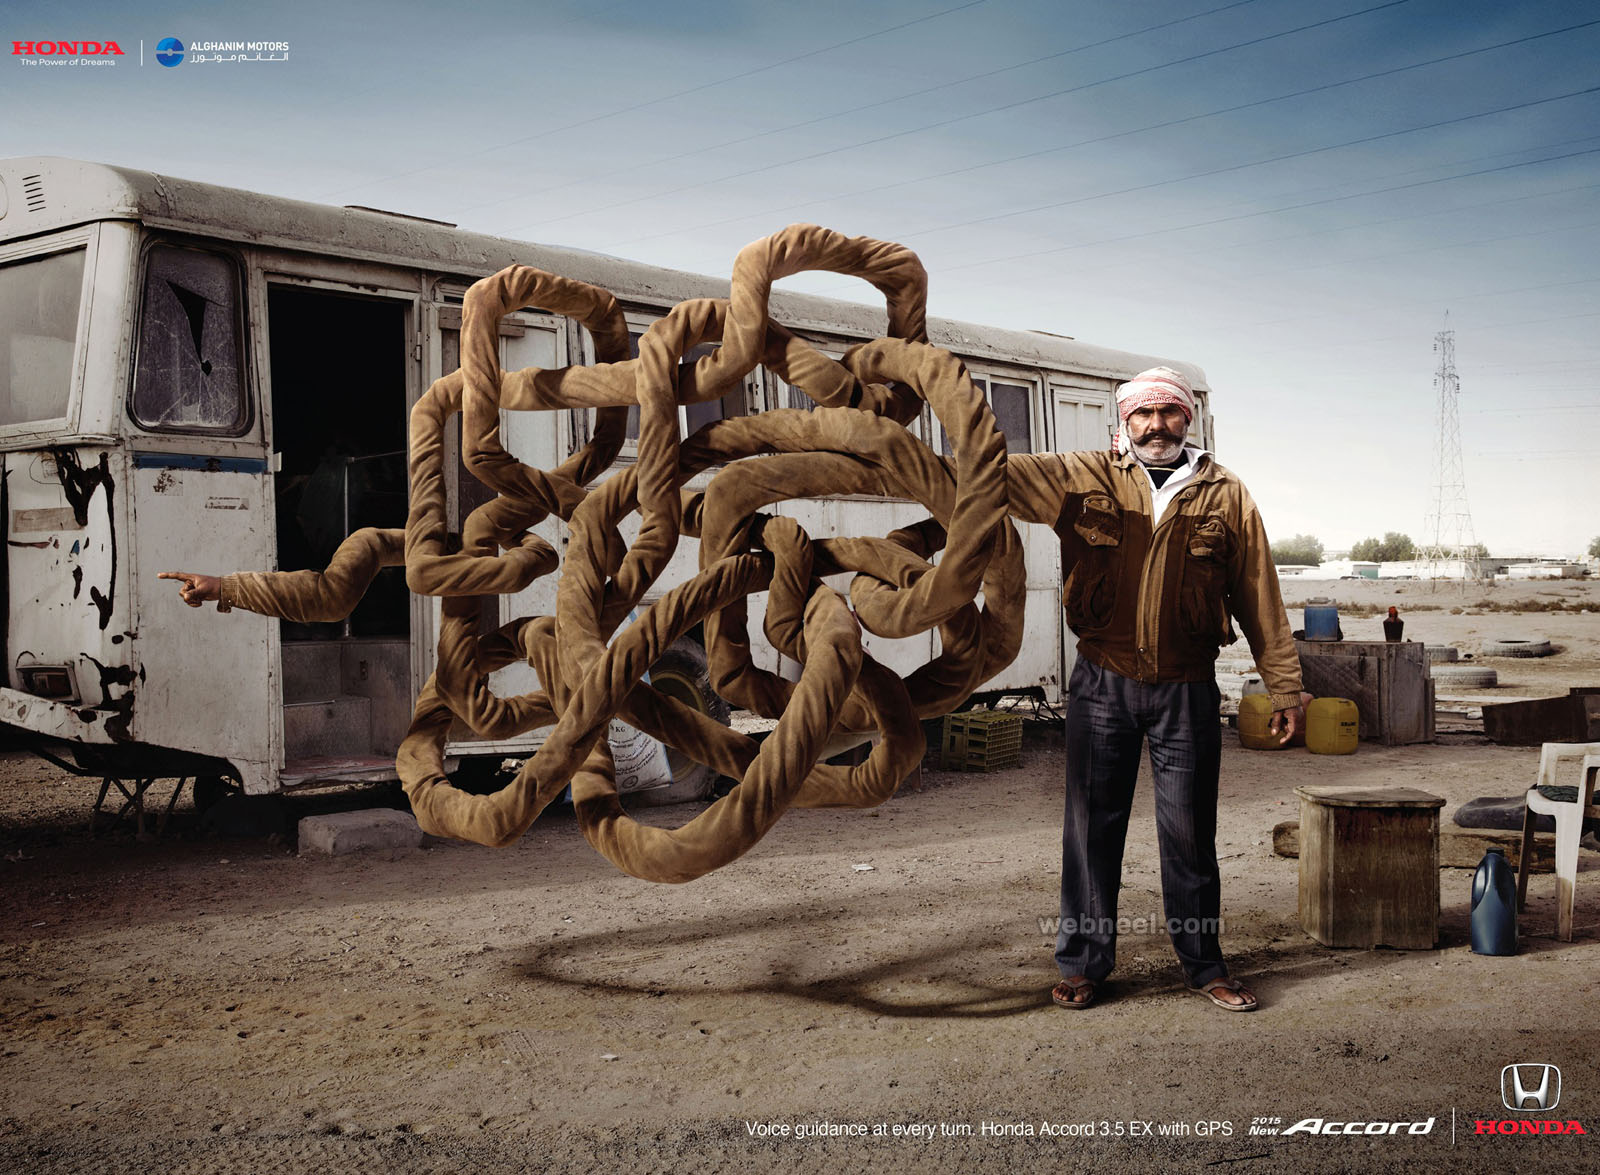 honda car print ads by alghanim motors